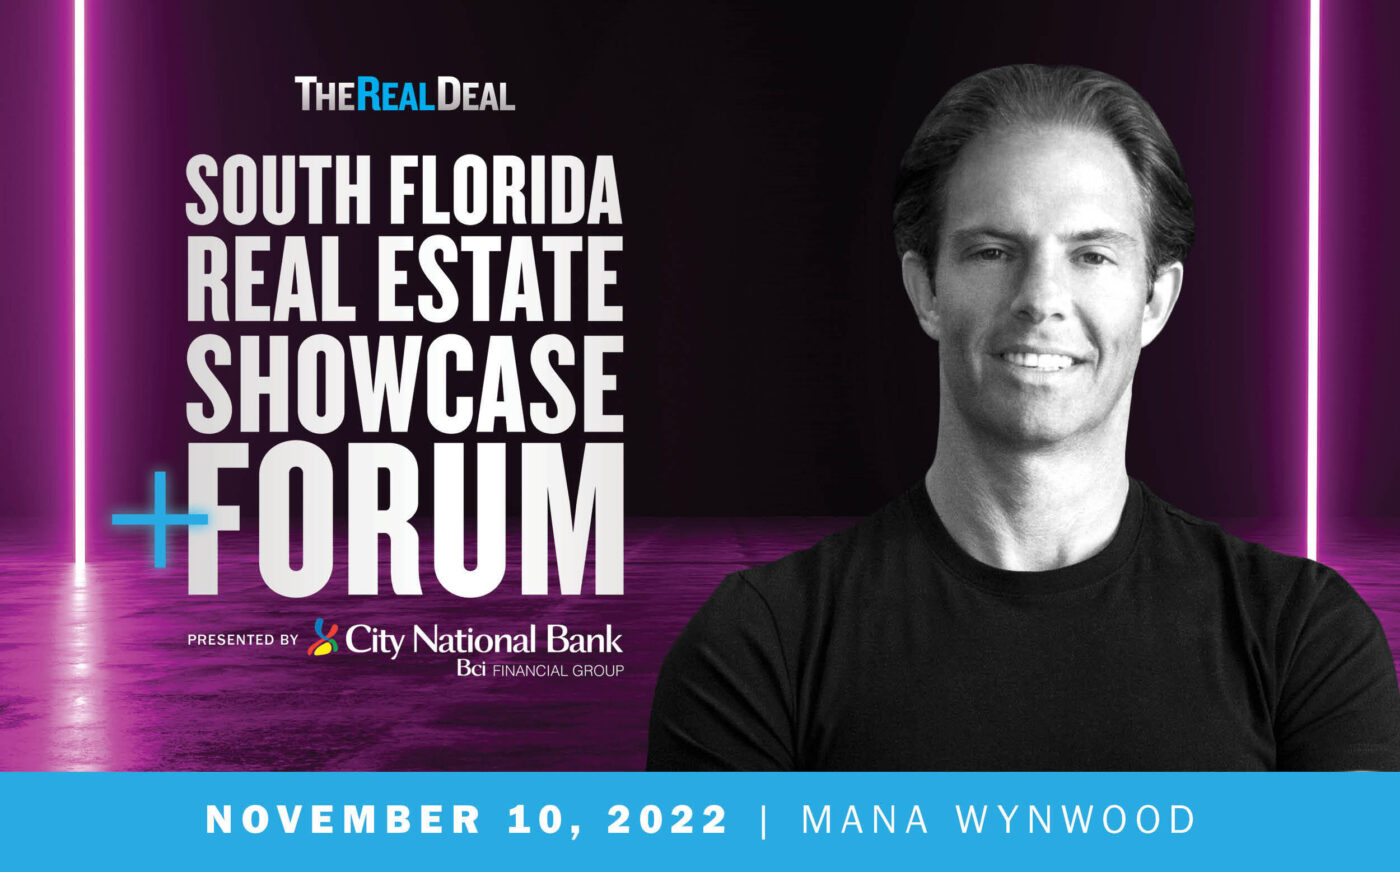 Florida Showcase speaker spotlight: Michael Shvo